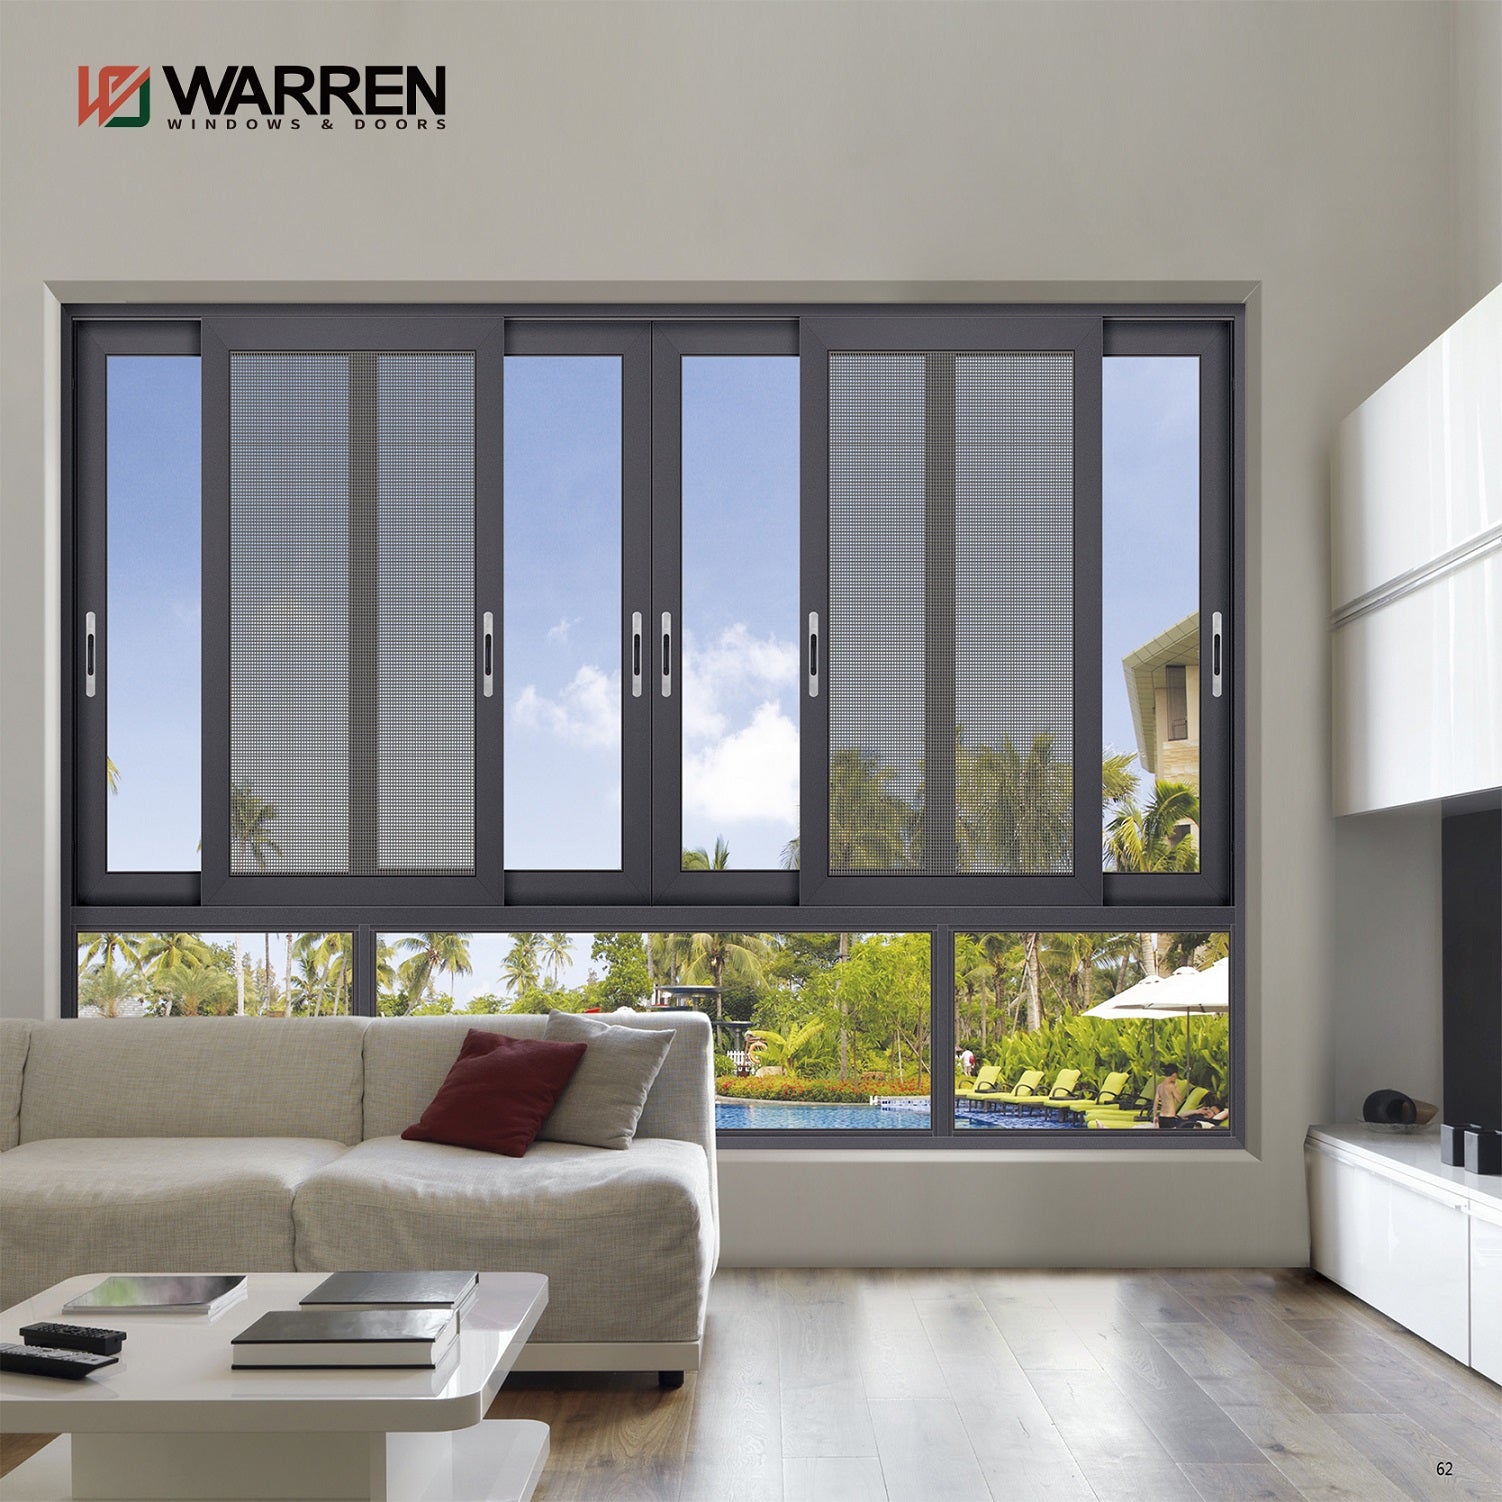 Warren 72x36 window 6ft x 3ft standard house window size sliding window hot sale in Europe and North American